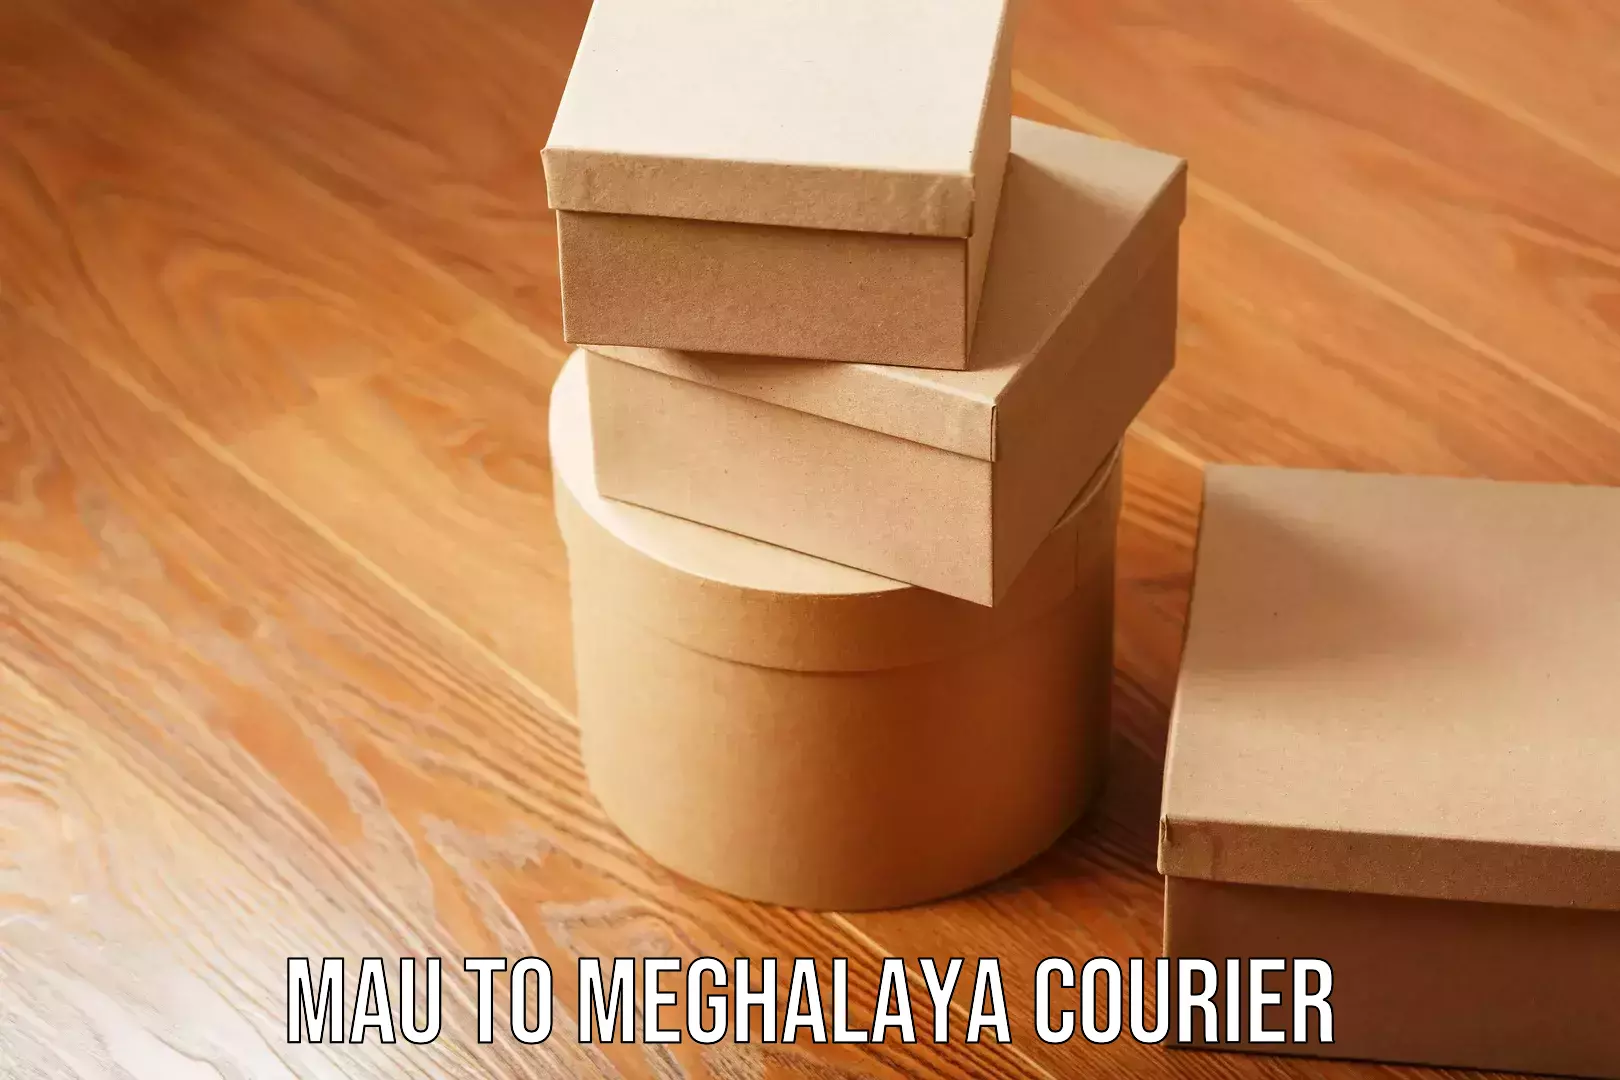 Specialized moving company Mau to Meghalaya